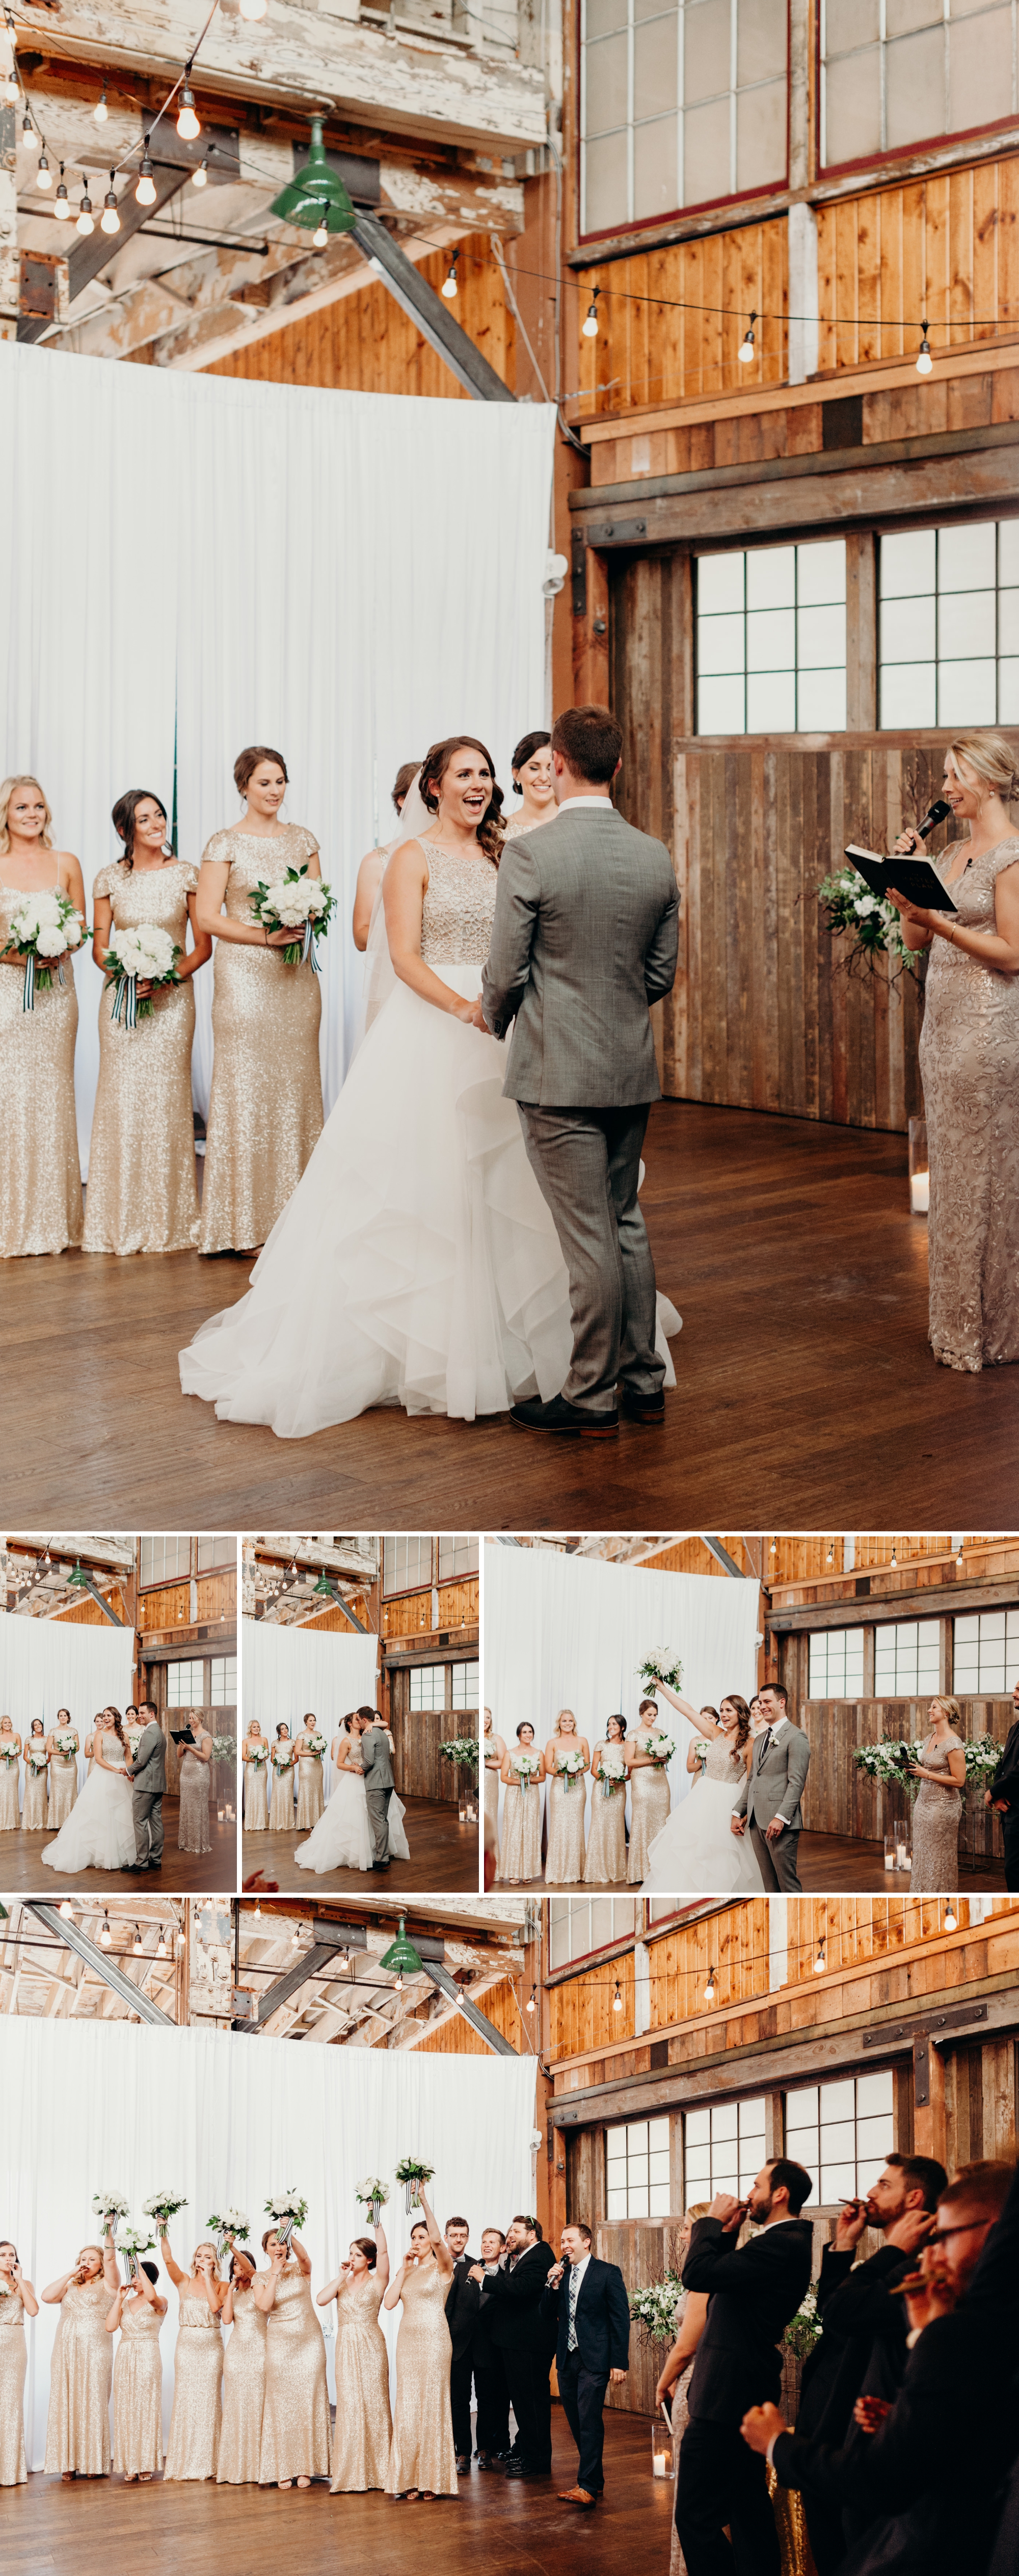 A super wonderful wedding ceremony in Seattle, Washington. By Sodo Park wedding photographer Briana Morrison.